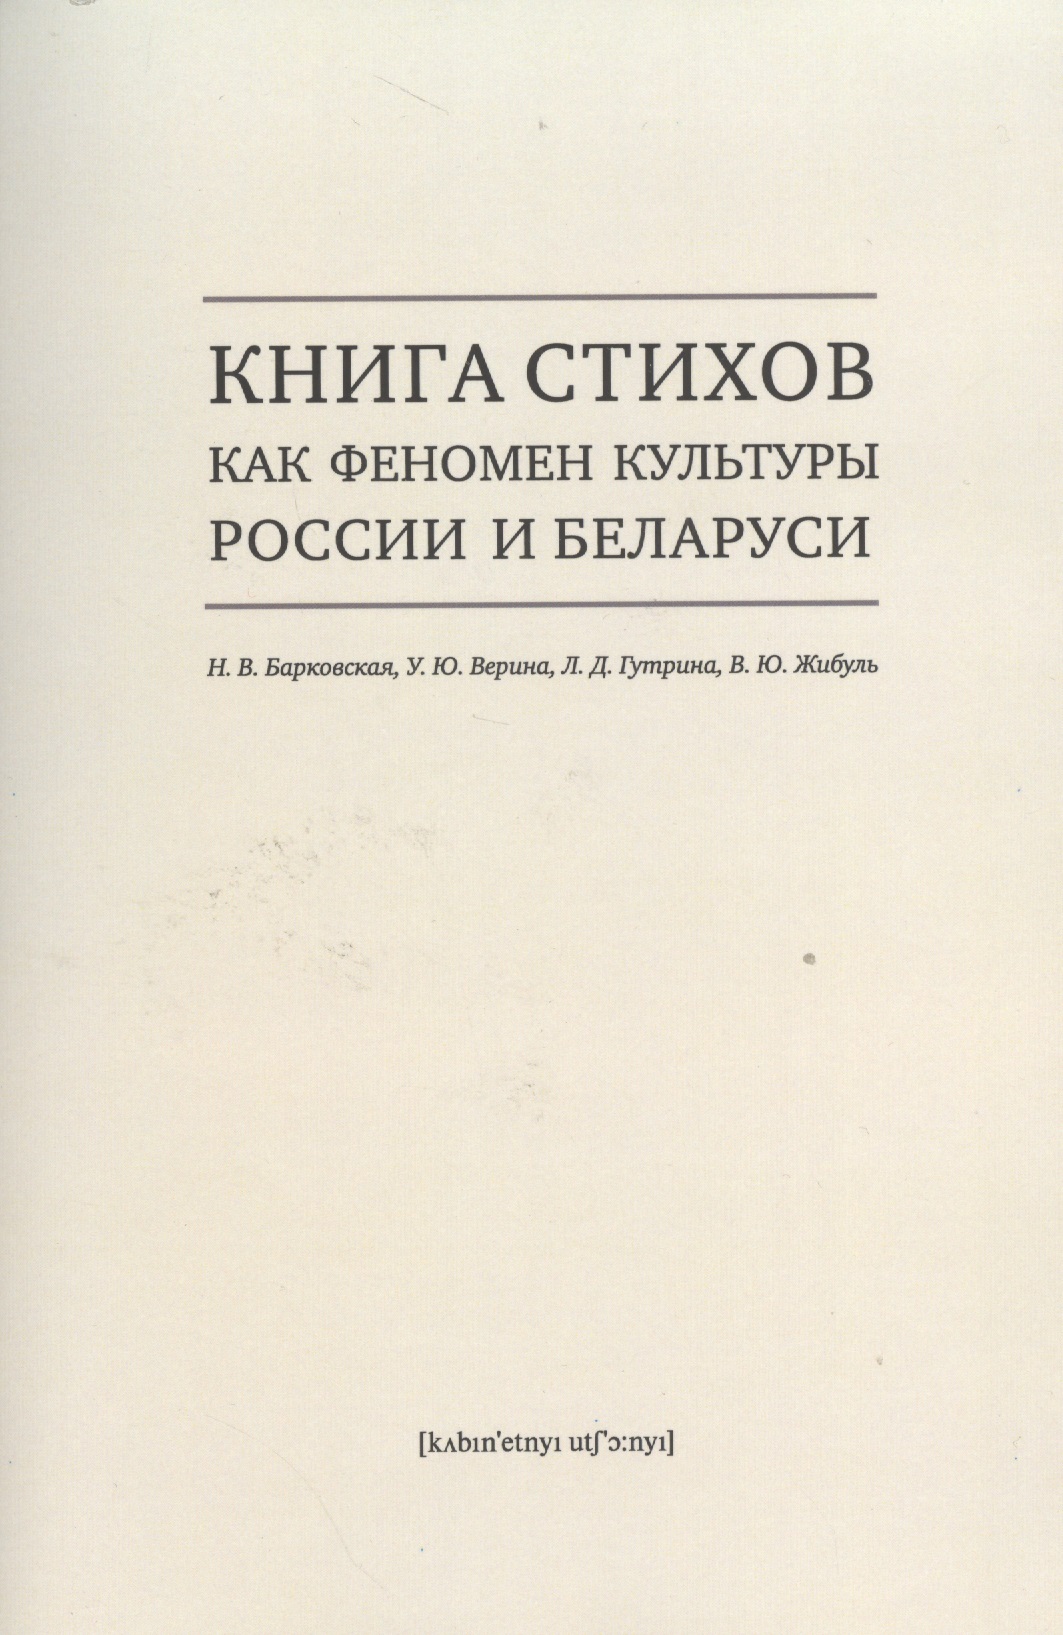 Книга стихов как феномен культуры России и Беларуси корея феномен к культуры